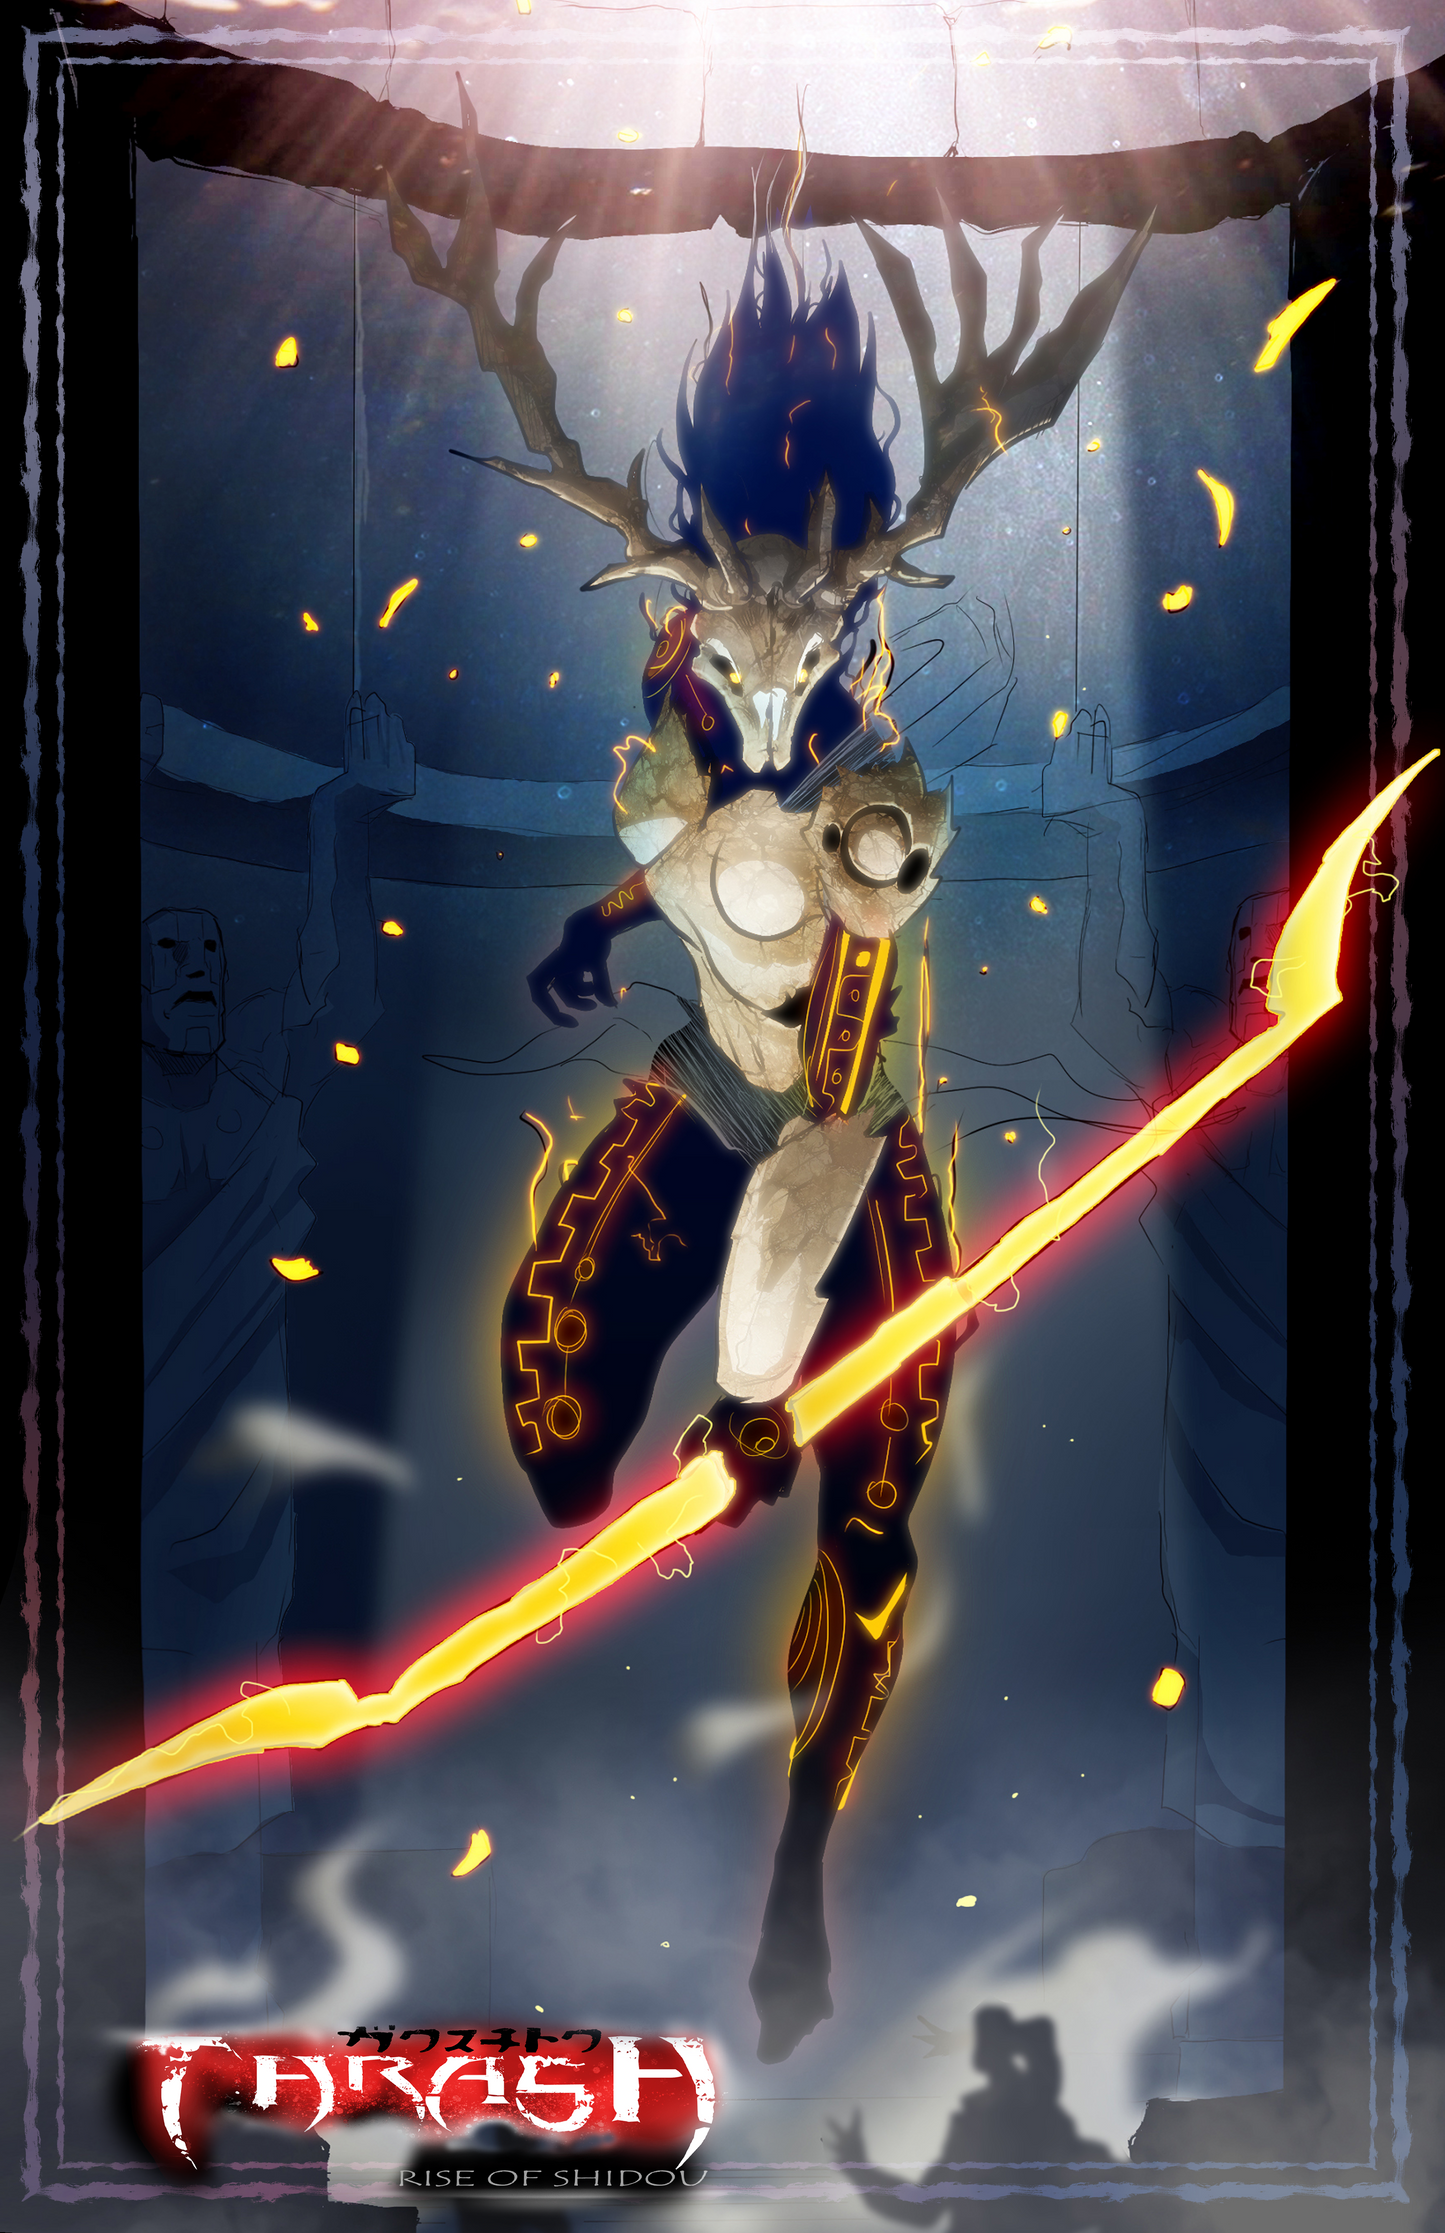 [Thrash: Rise of Shidou] Artemis - Goddess of the Hunt Art Print on Premium Paper